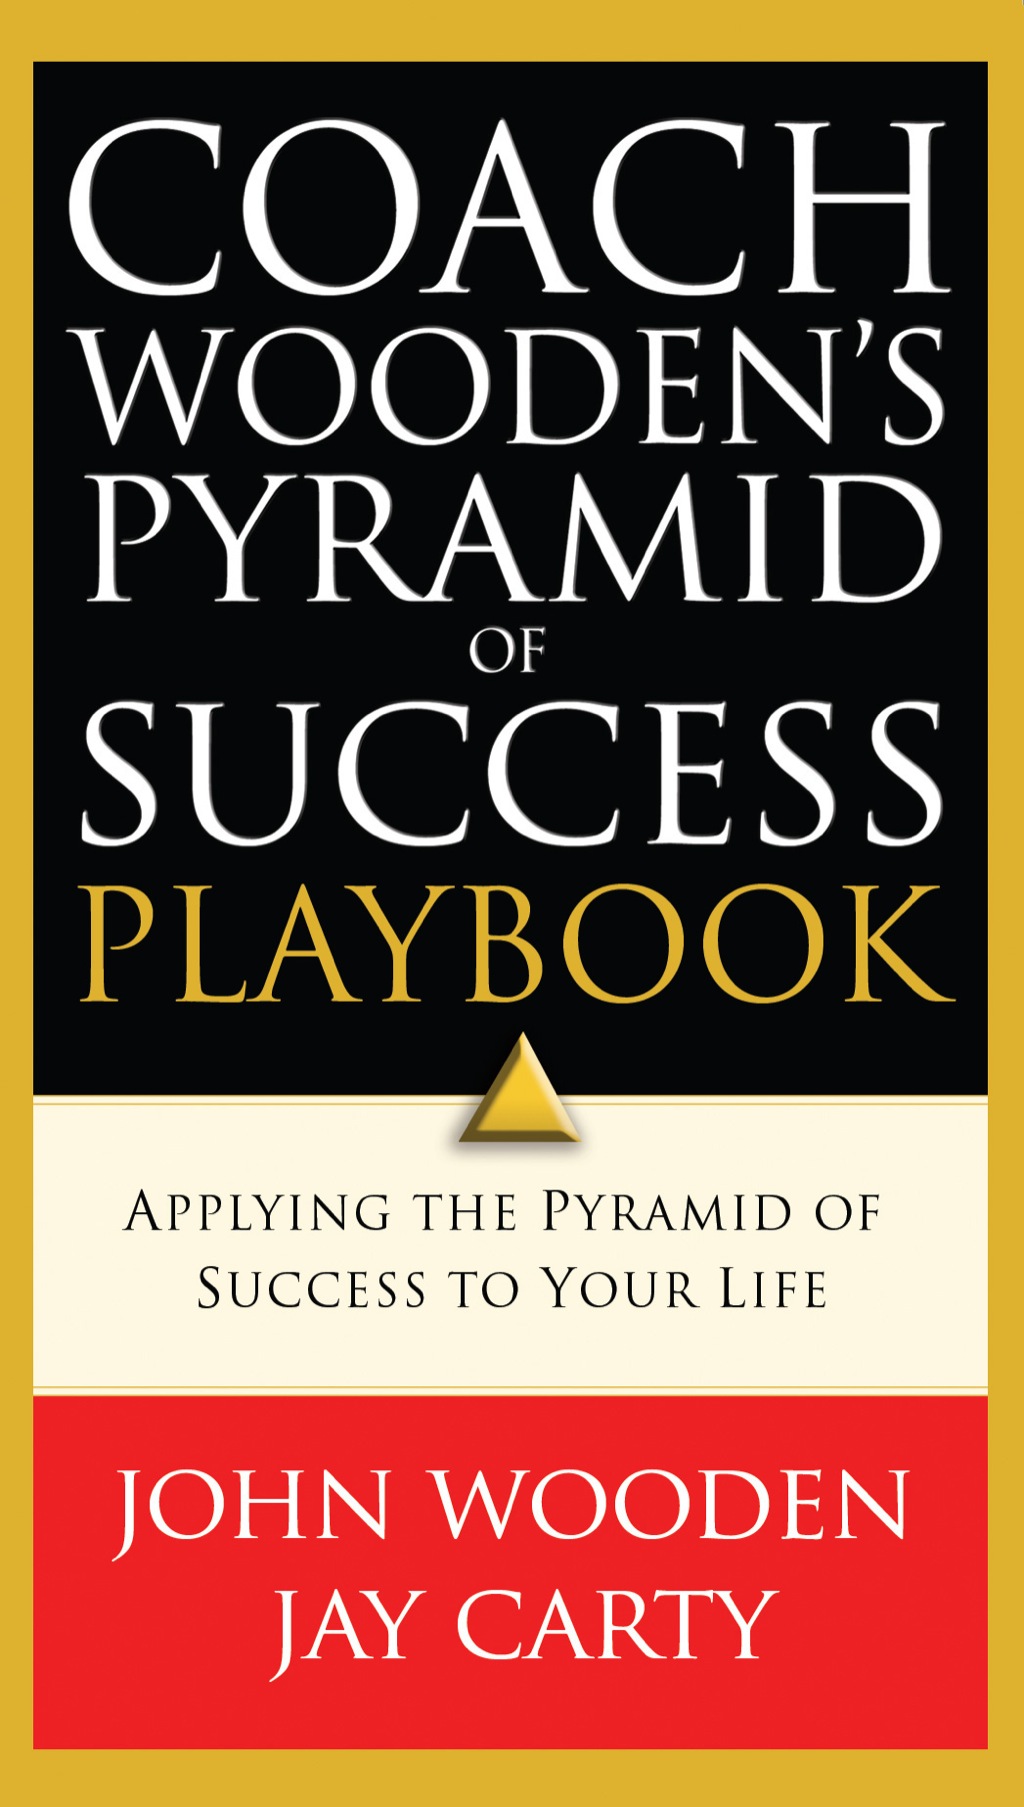 Coach Wooden's Pyramid of Success Playbook (eBook) - John Wooden,